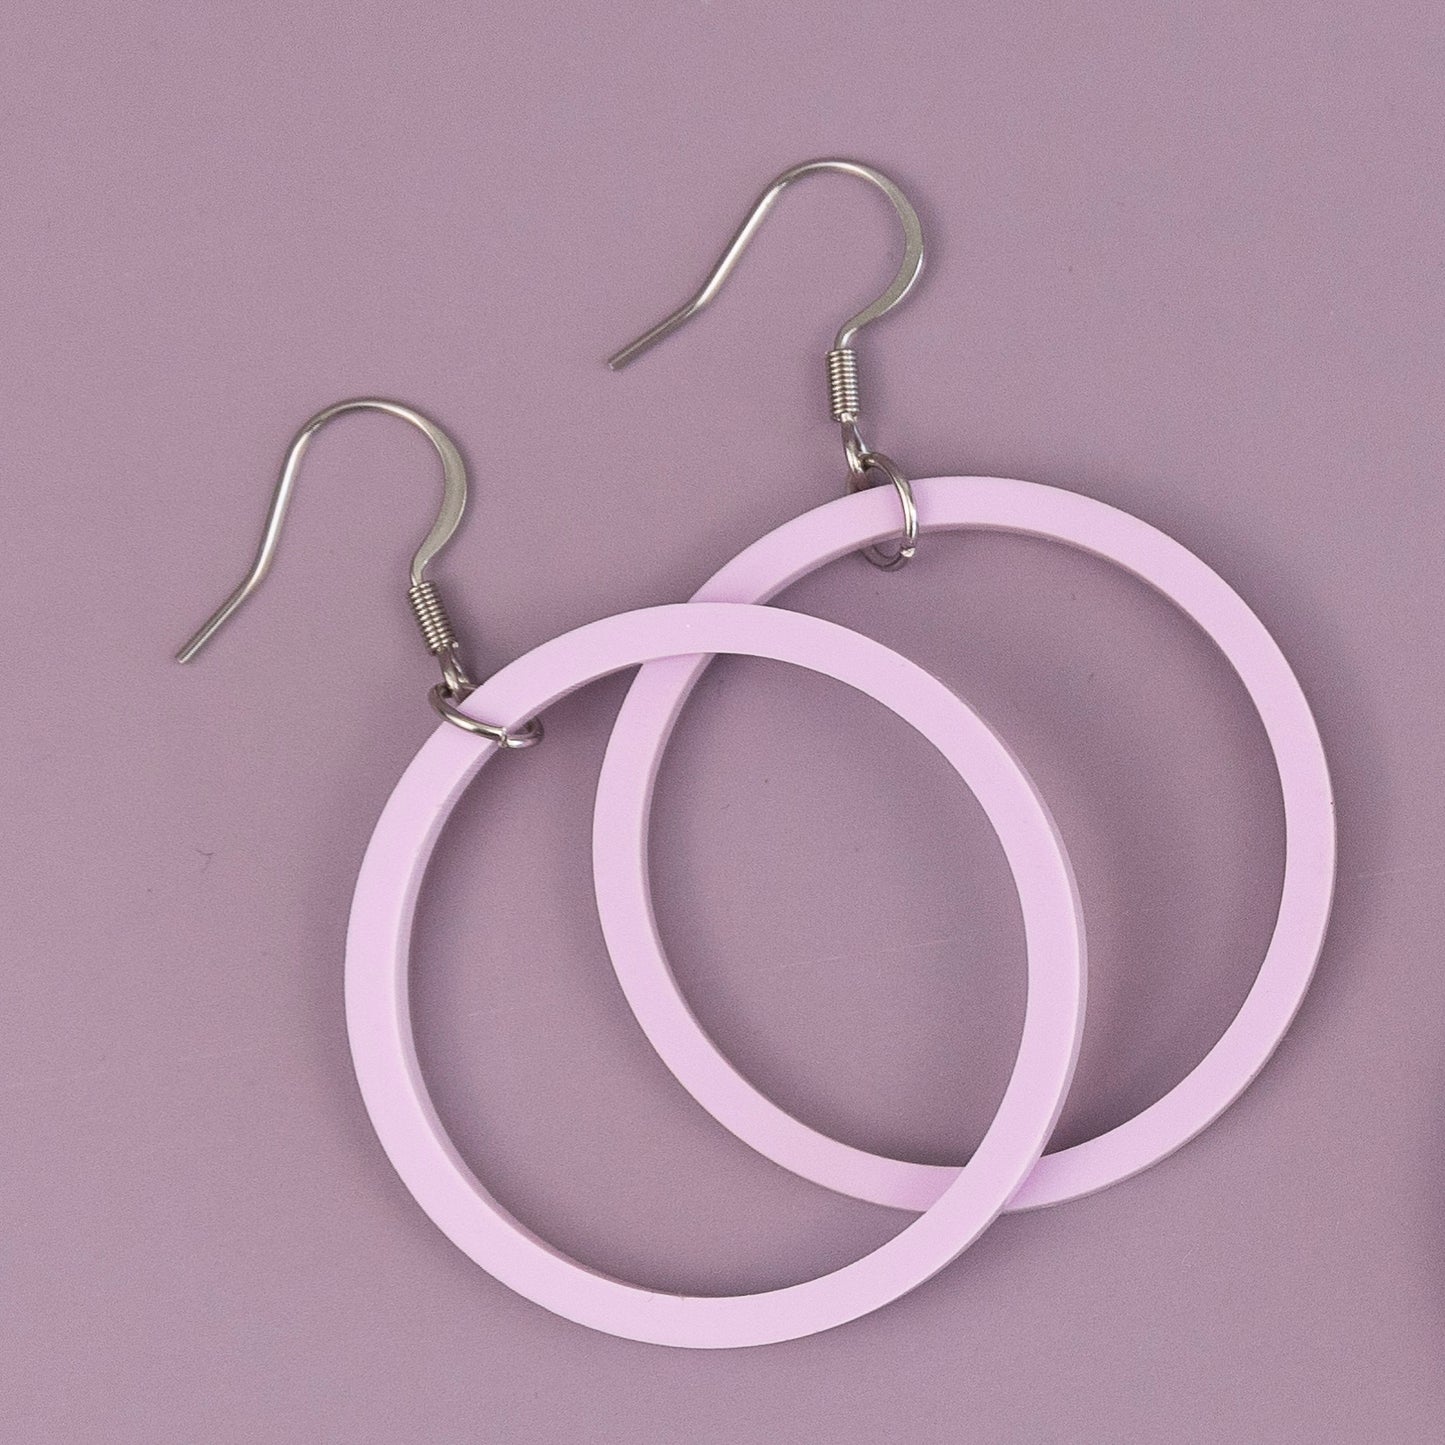 THE STAPLE HOOP in Lavender/ Lightweight Acrylic Statement Earrings